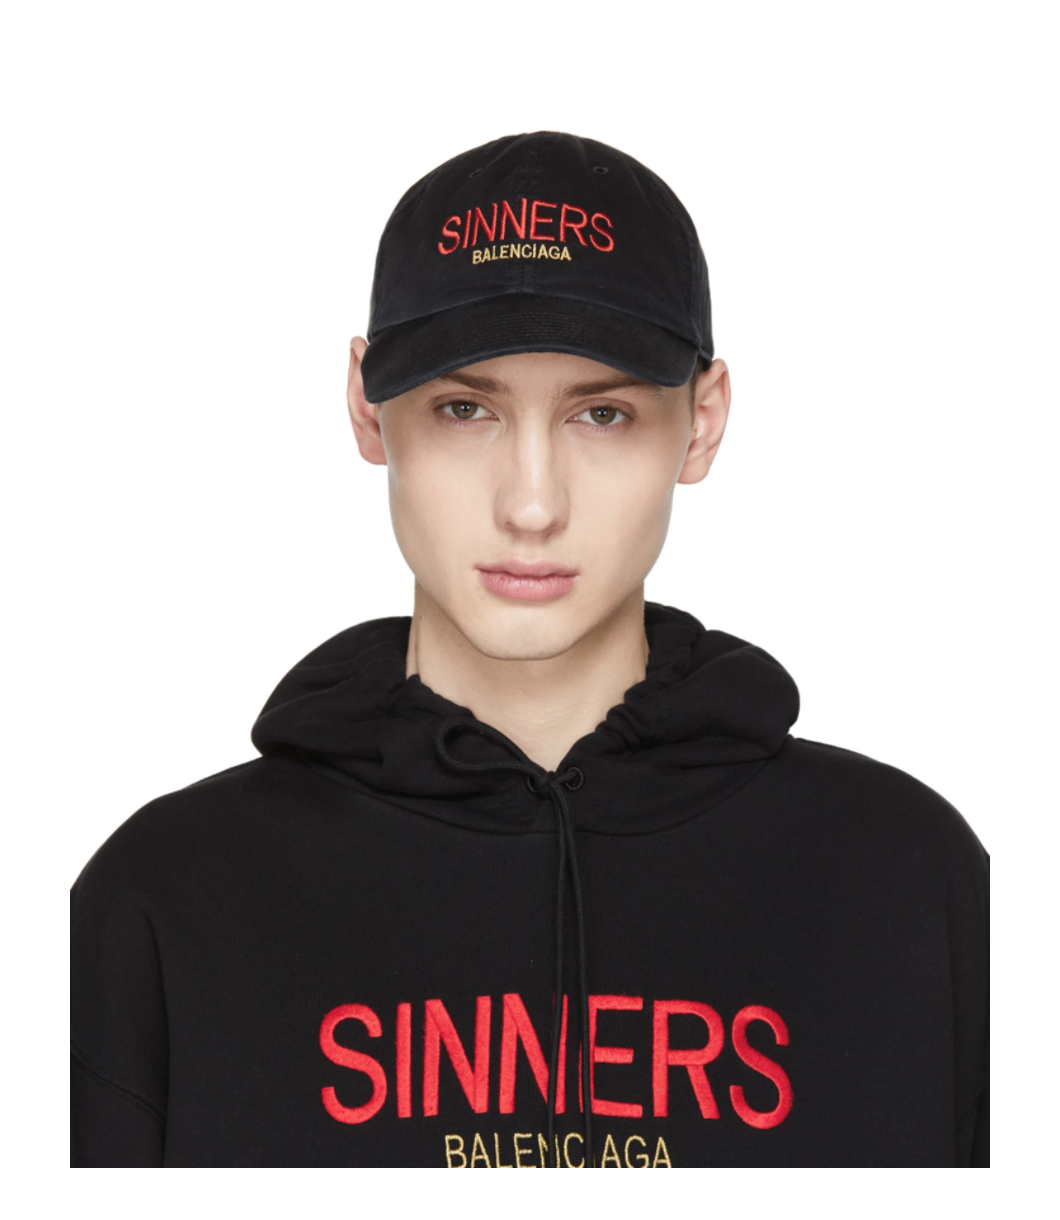 Shop Balenciaga’s New SINNERS Collection At SSENSE